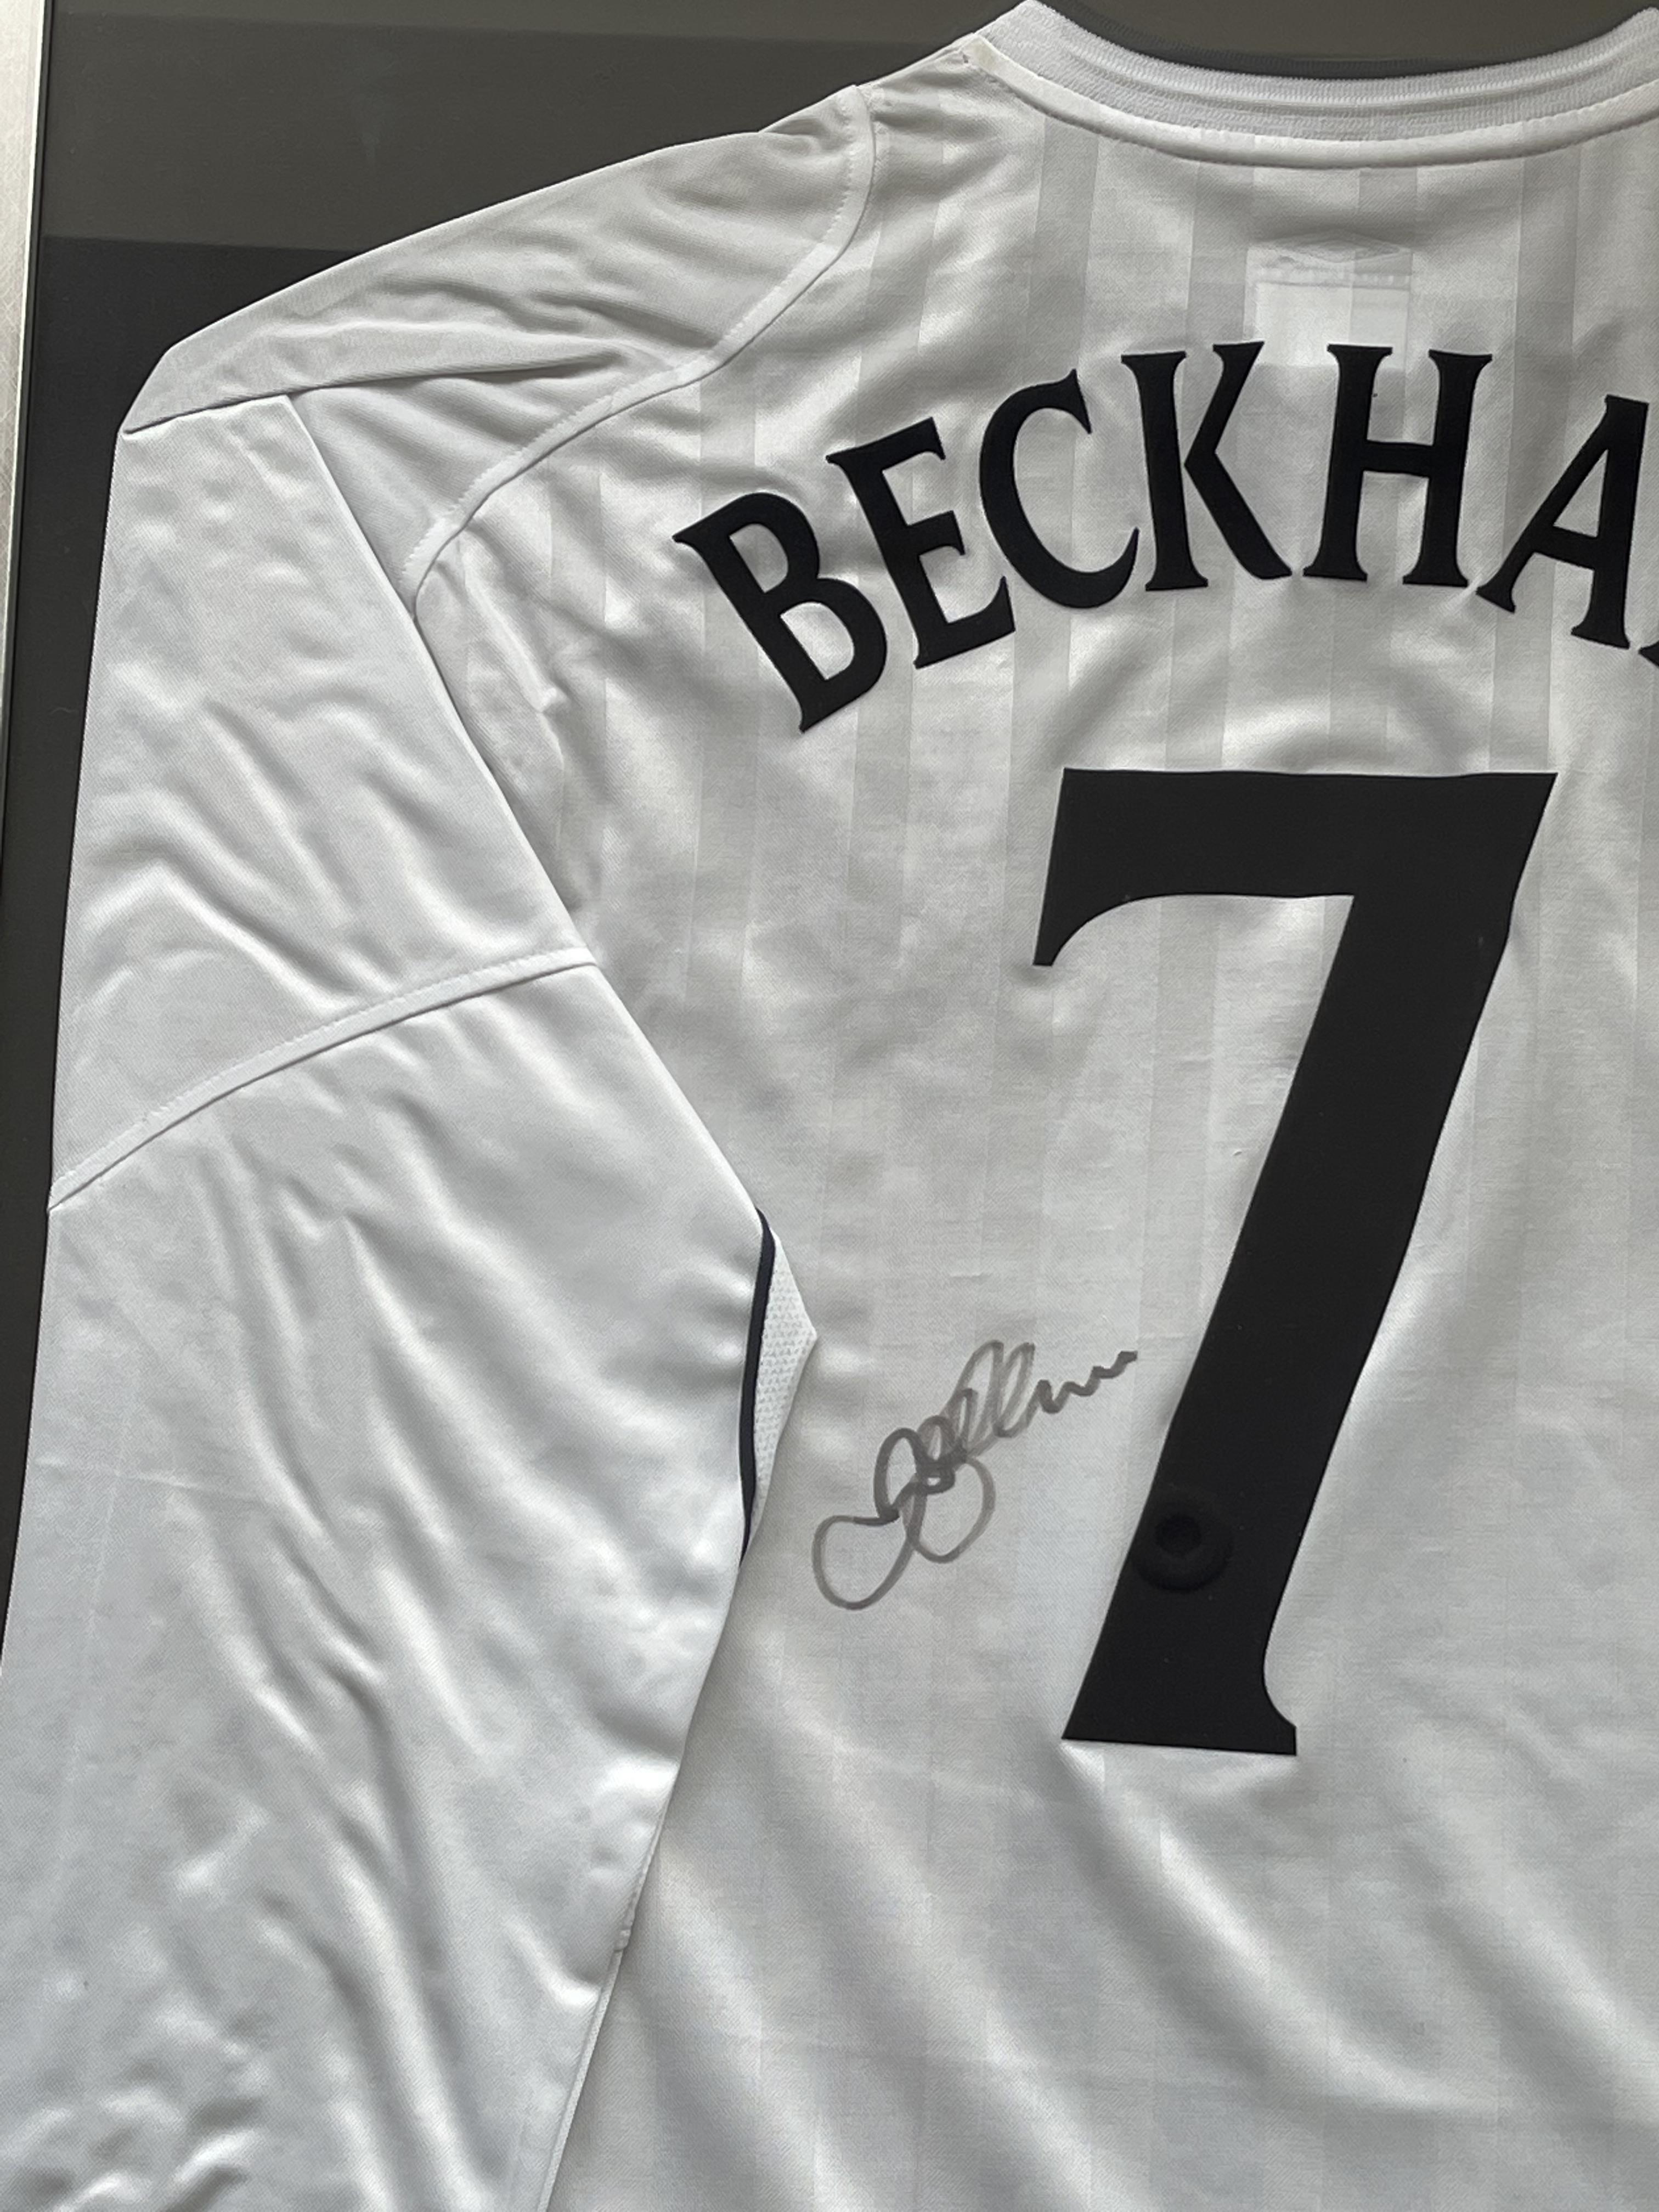 David Beckham - Framed Signed England Shirt with C - Image 2 of 13